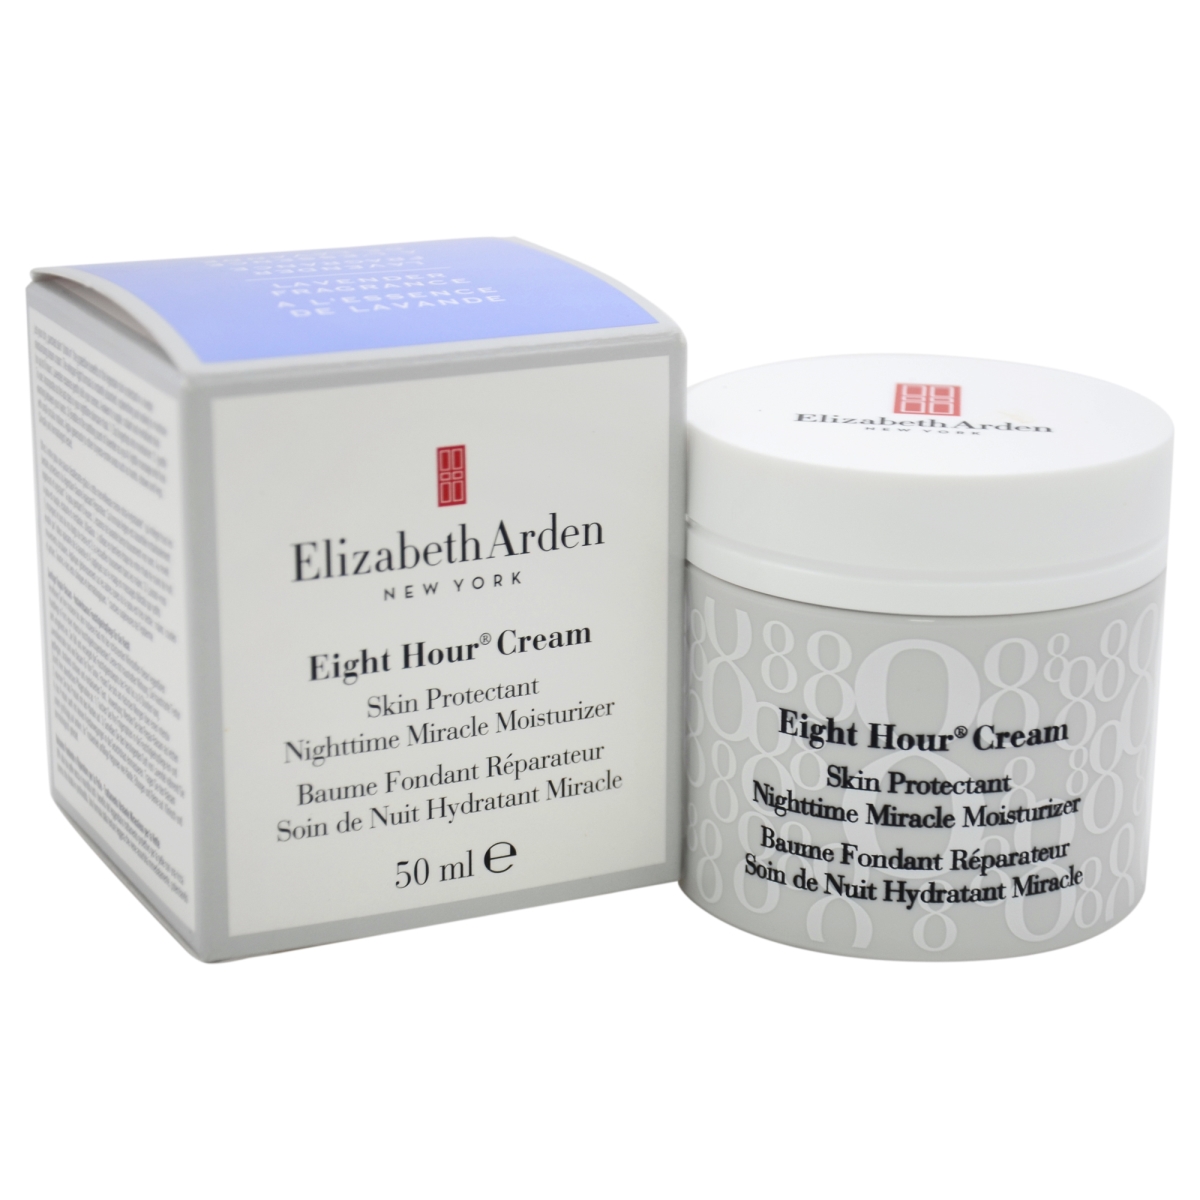 W-sc-3381 1.7 Oz Eight Hour Cream Skin Proctectant Nighttime Miracle Moisturizer For Women